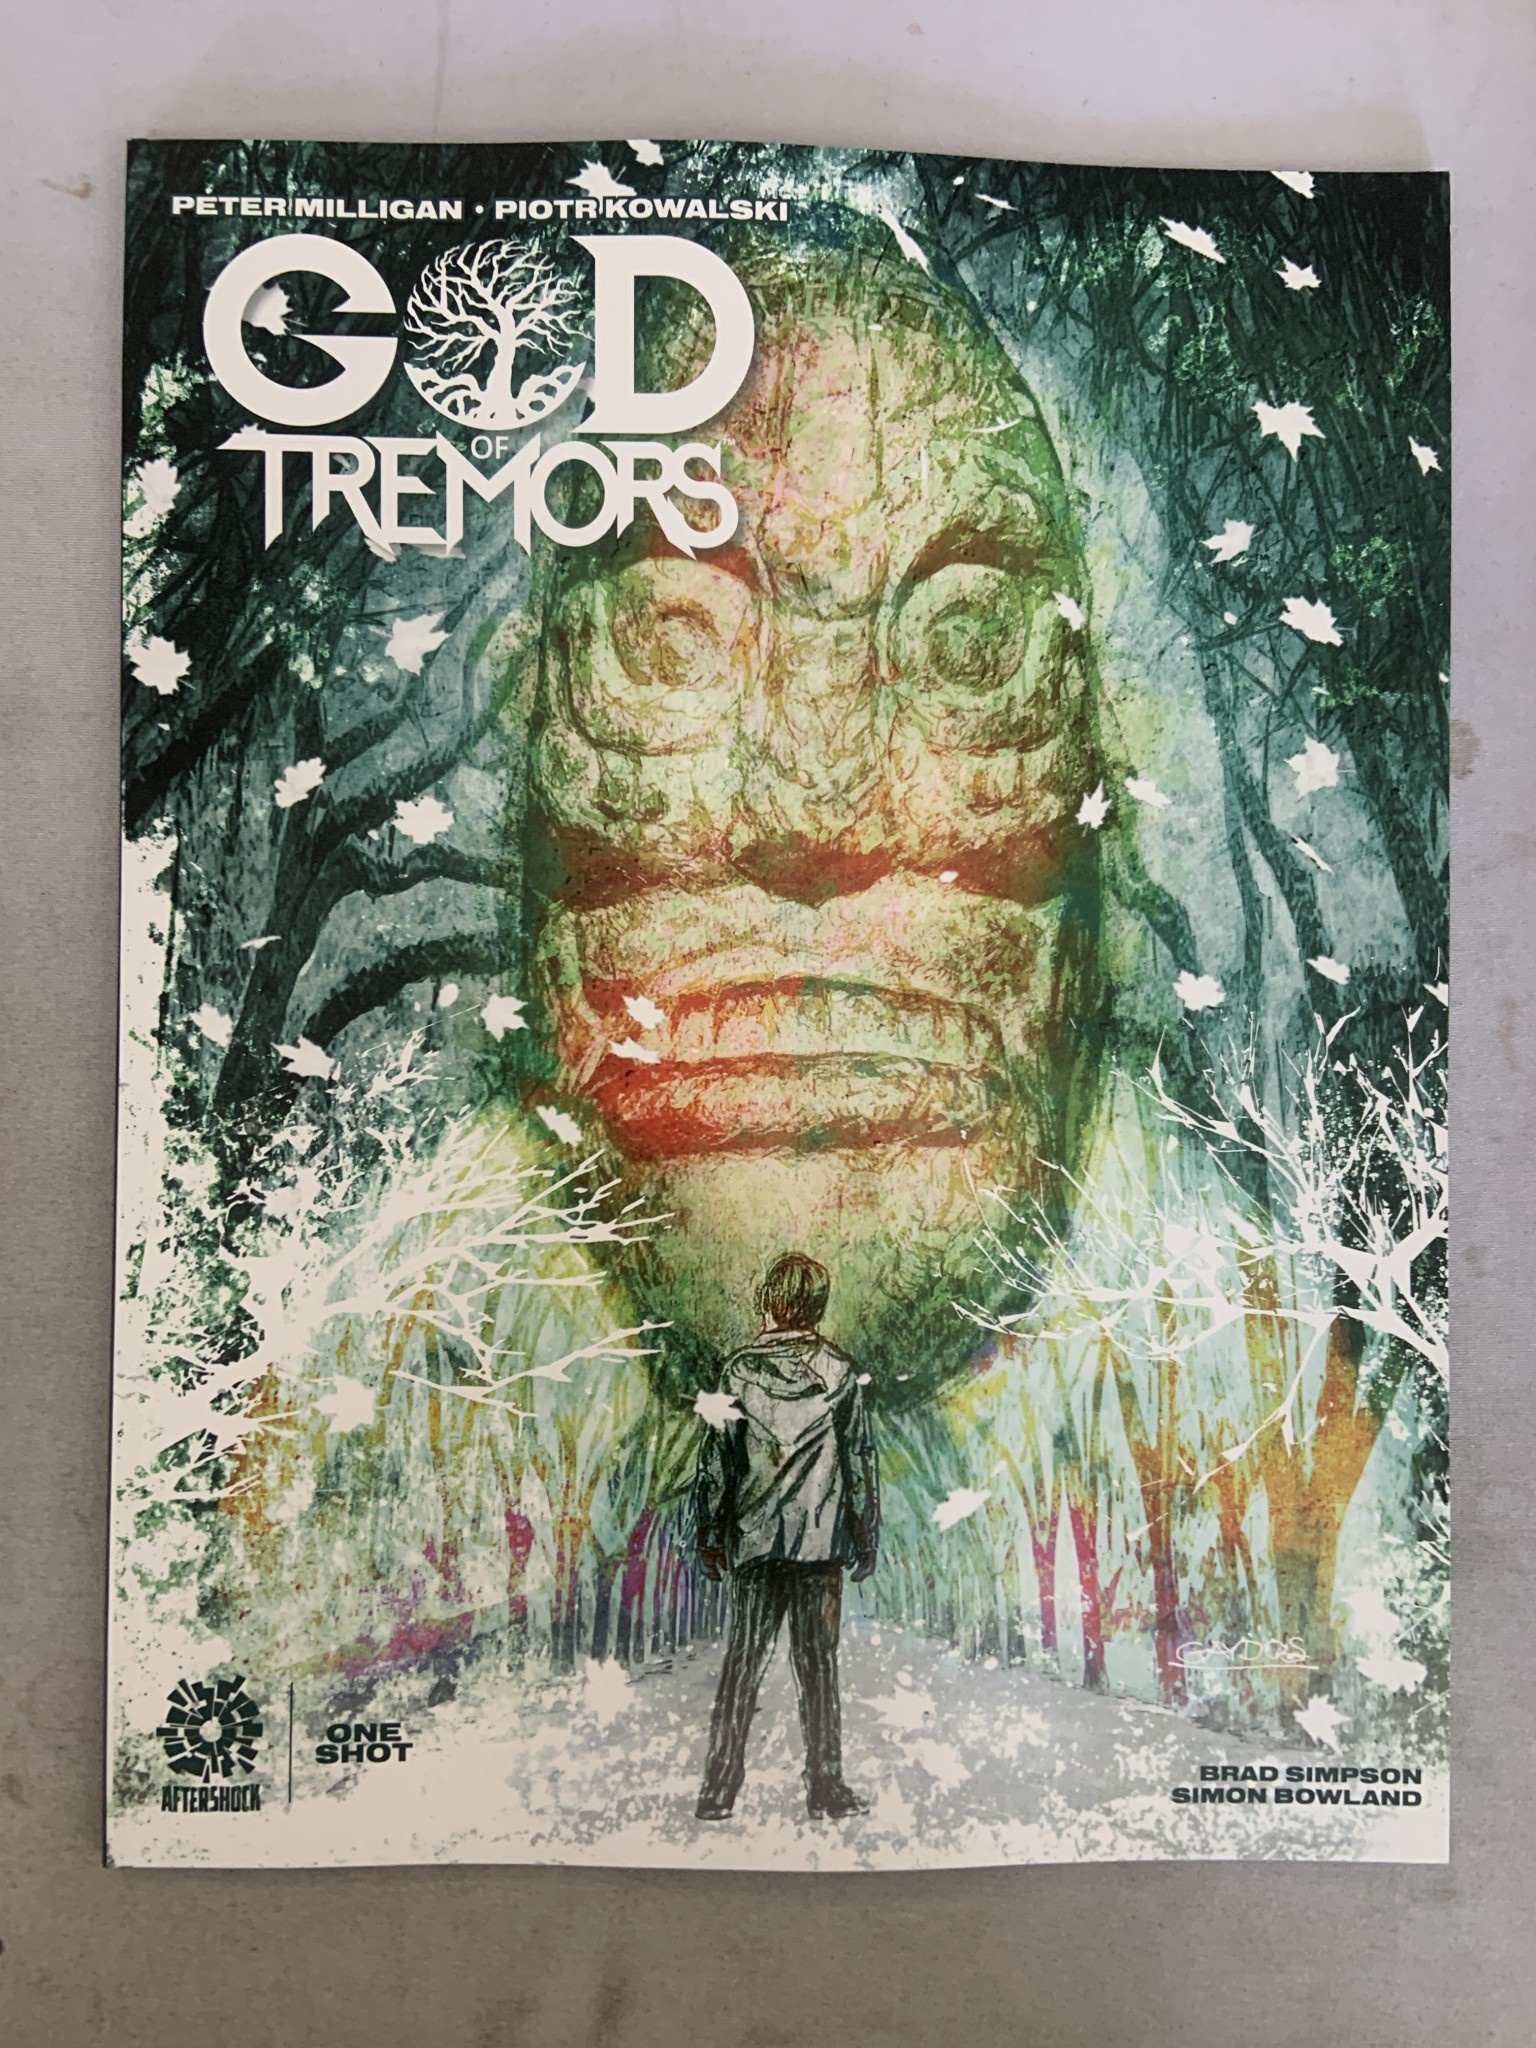 God of Tremors – AfterShockComics